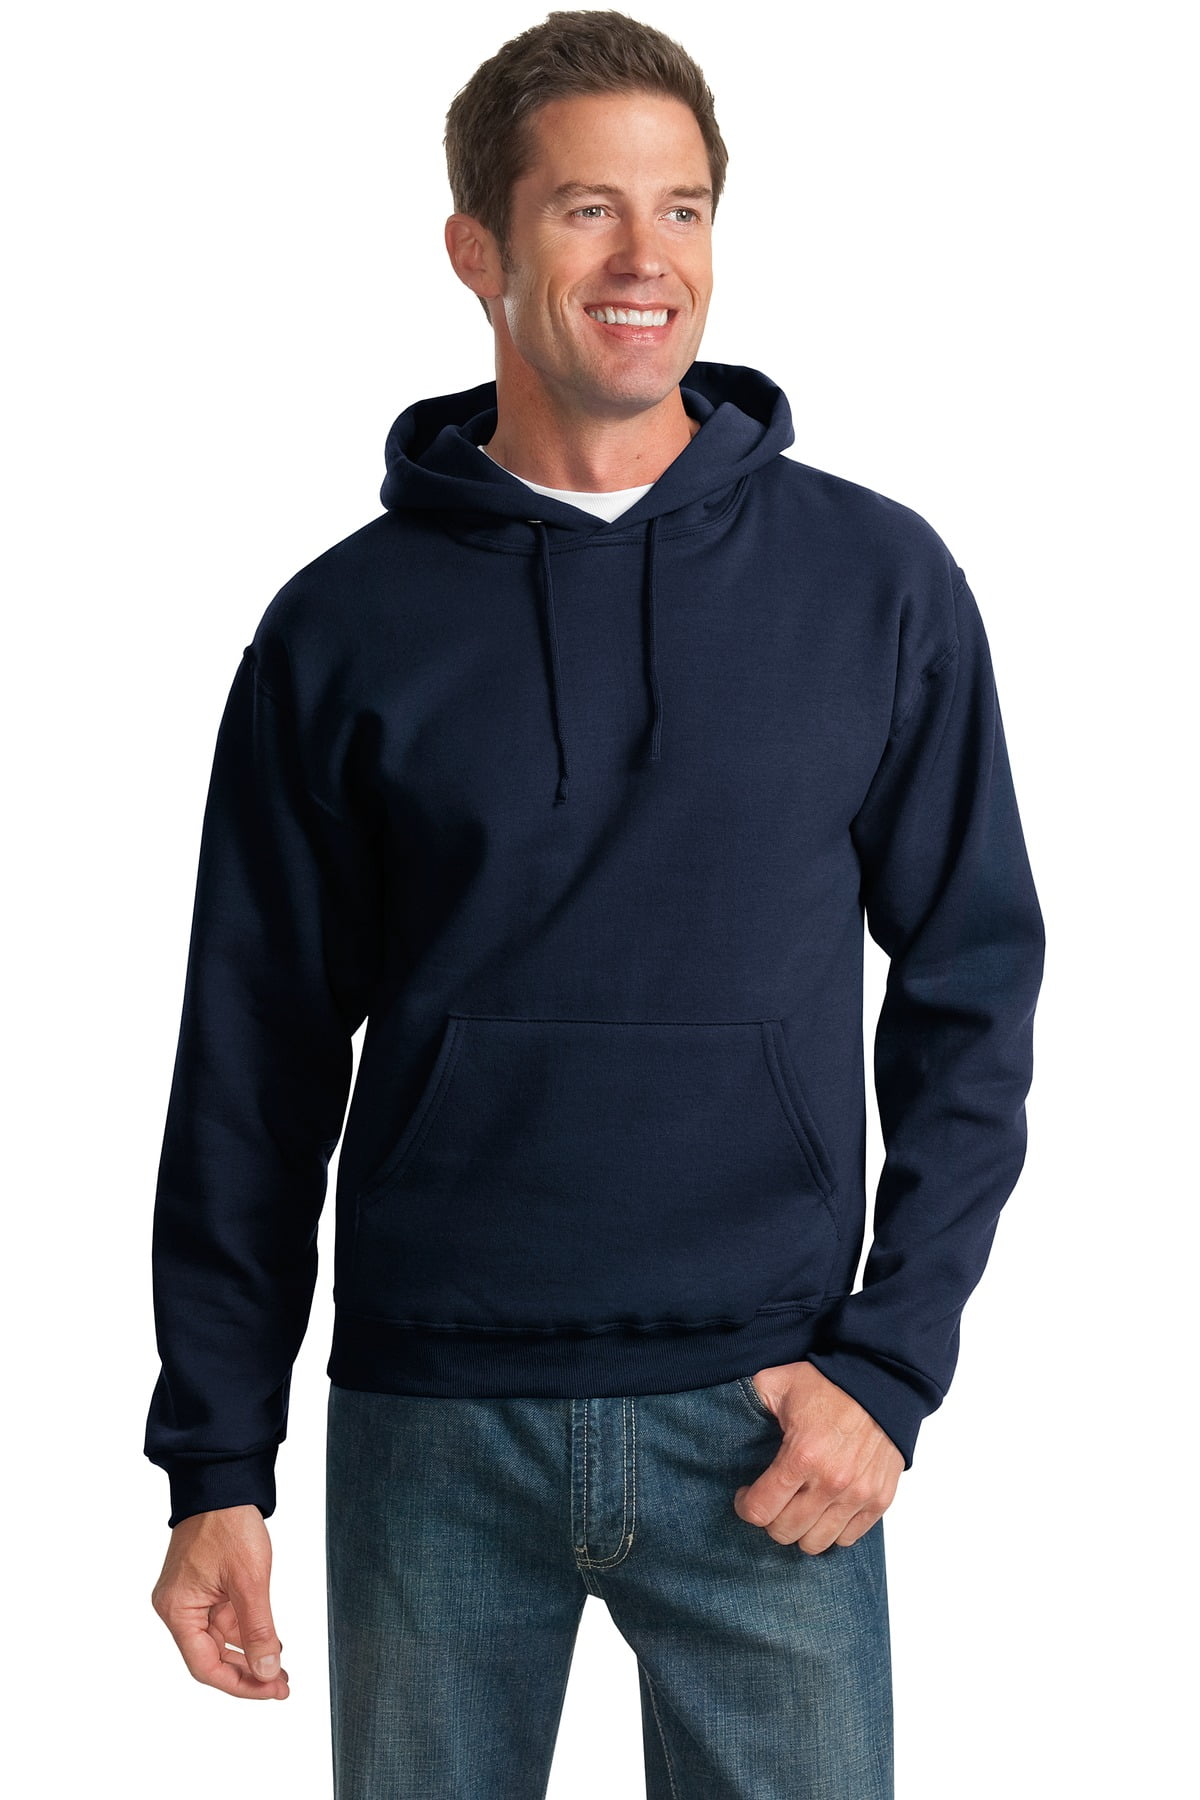 JERZEES ® - NuBlend ® Pullover Hooded Sweatshirt. 996M - Walmart.com